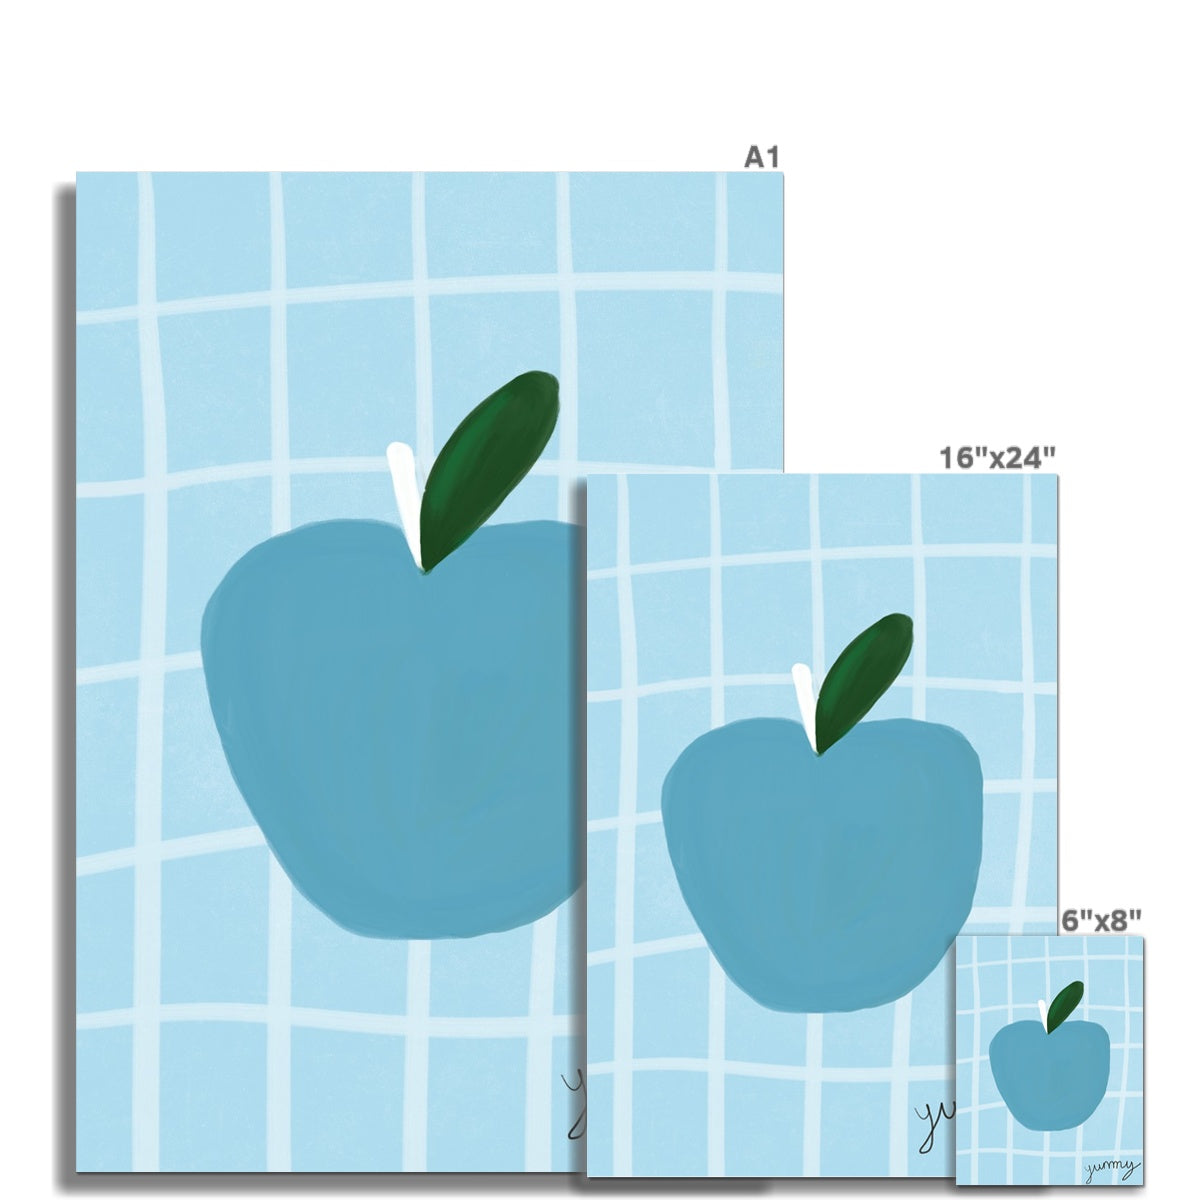 Yummy Apple Print - Blue, Dark Blue Fine Art Print